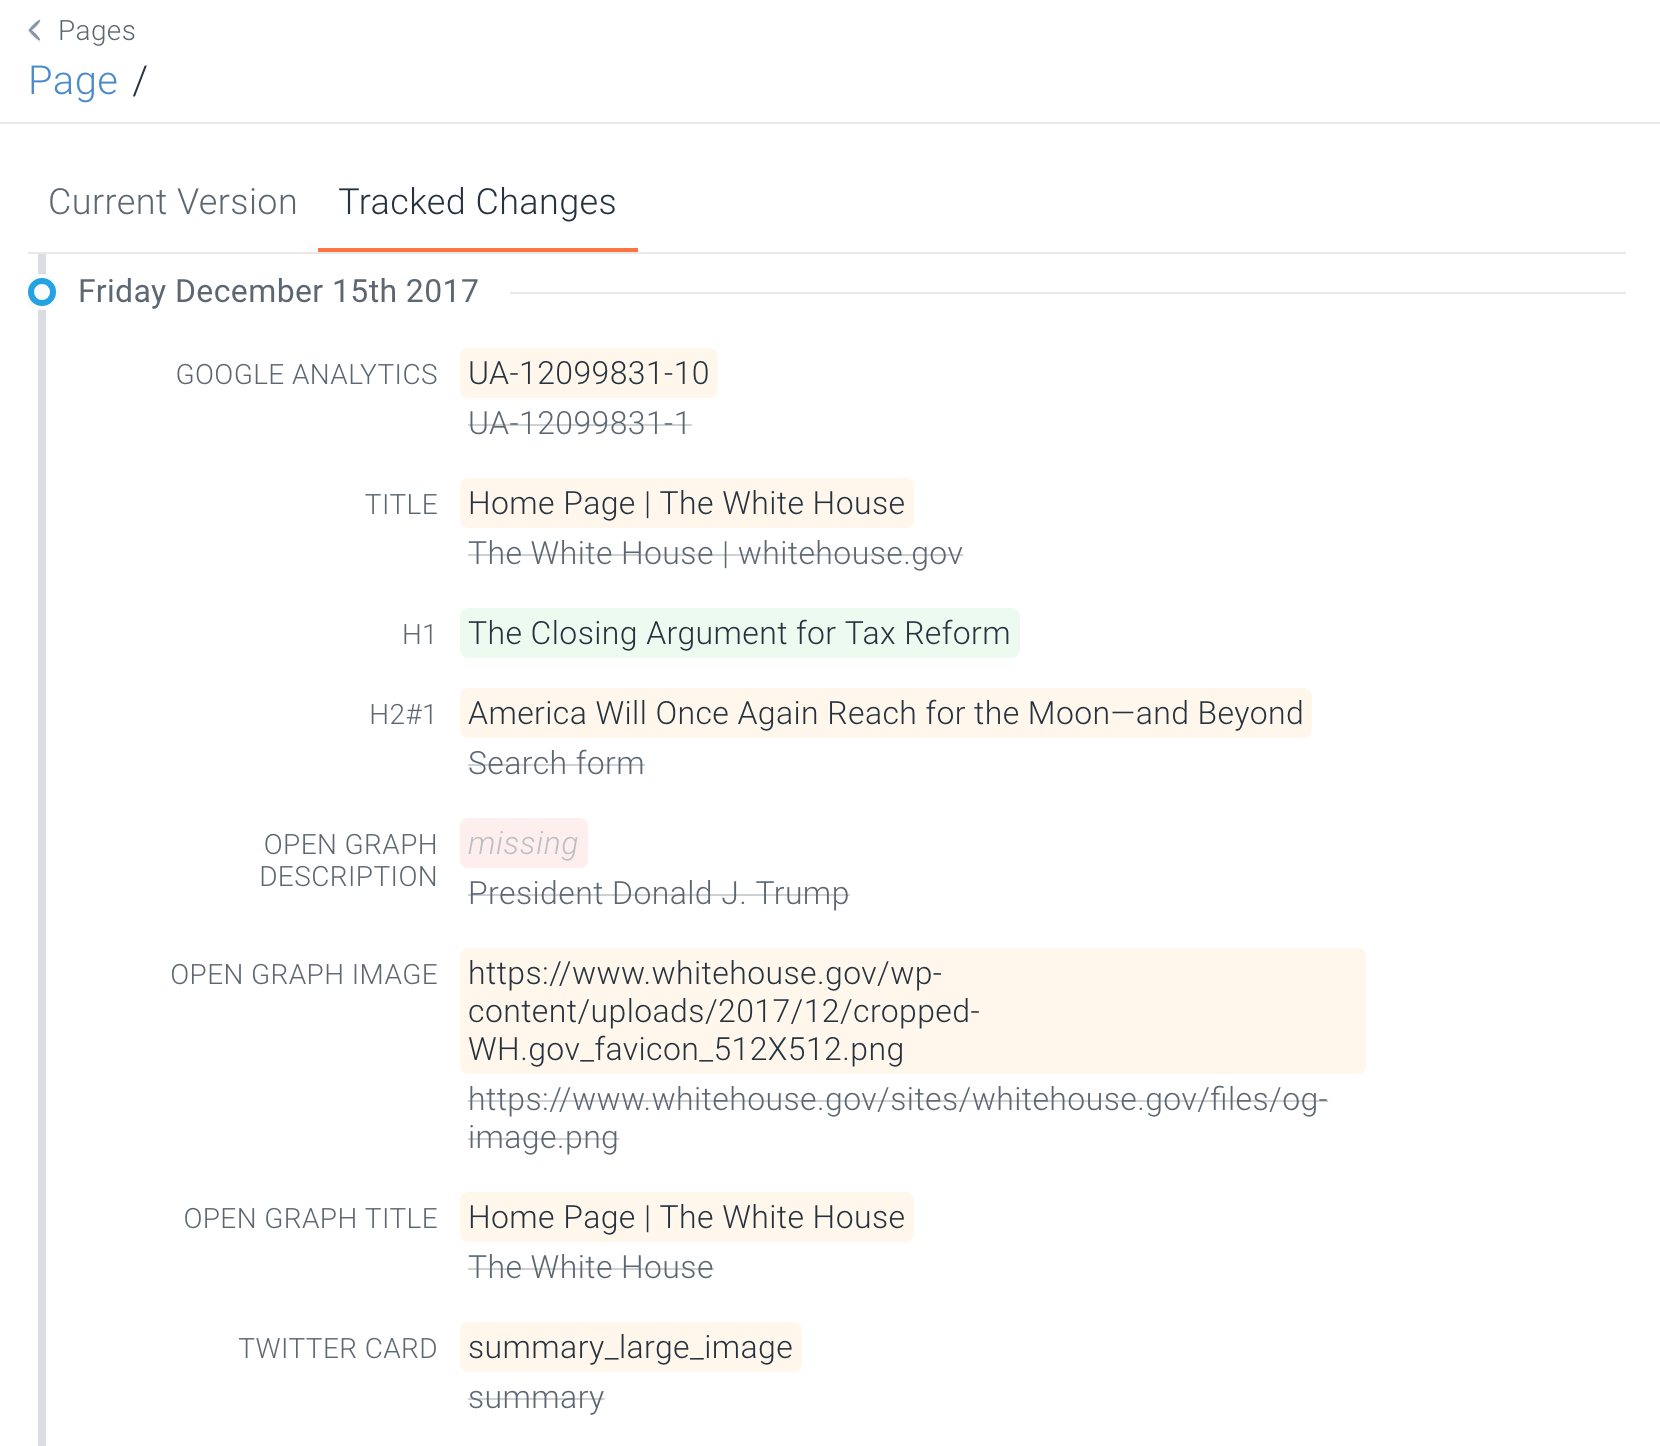 ContentKing Whitehouse.gov pre-christmas update